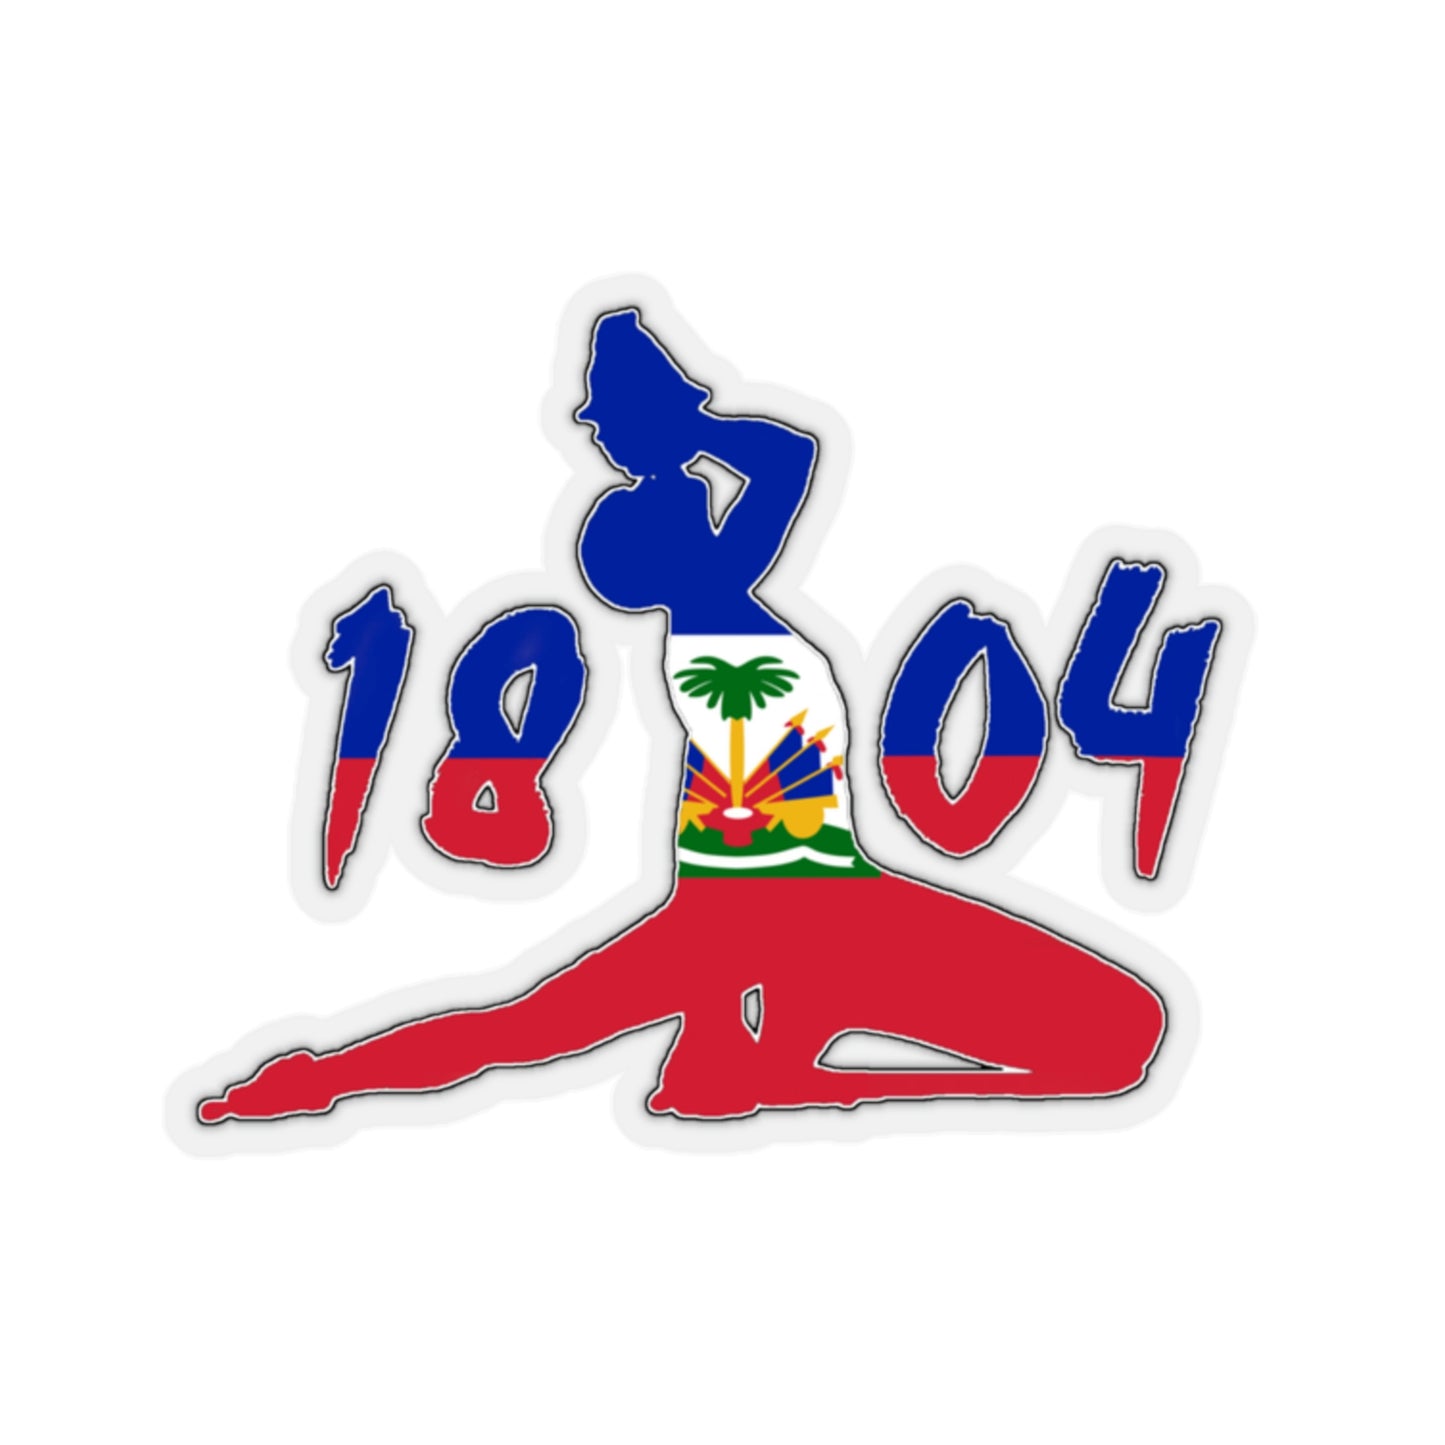 1804 Haiti Neg Marron Sticker | Neg Mawon Haitian Revolution 2